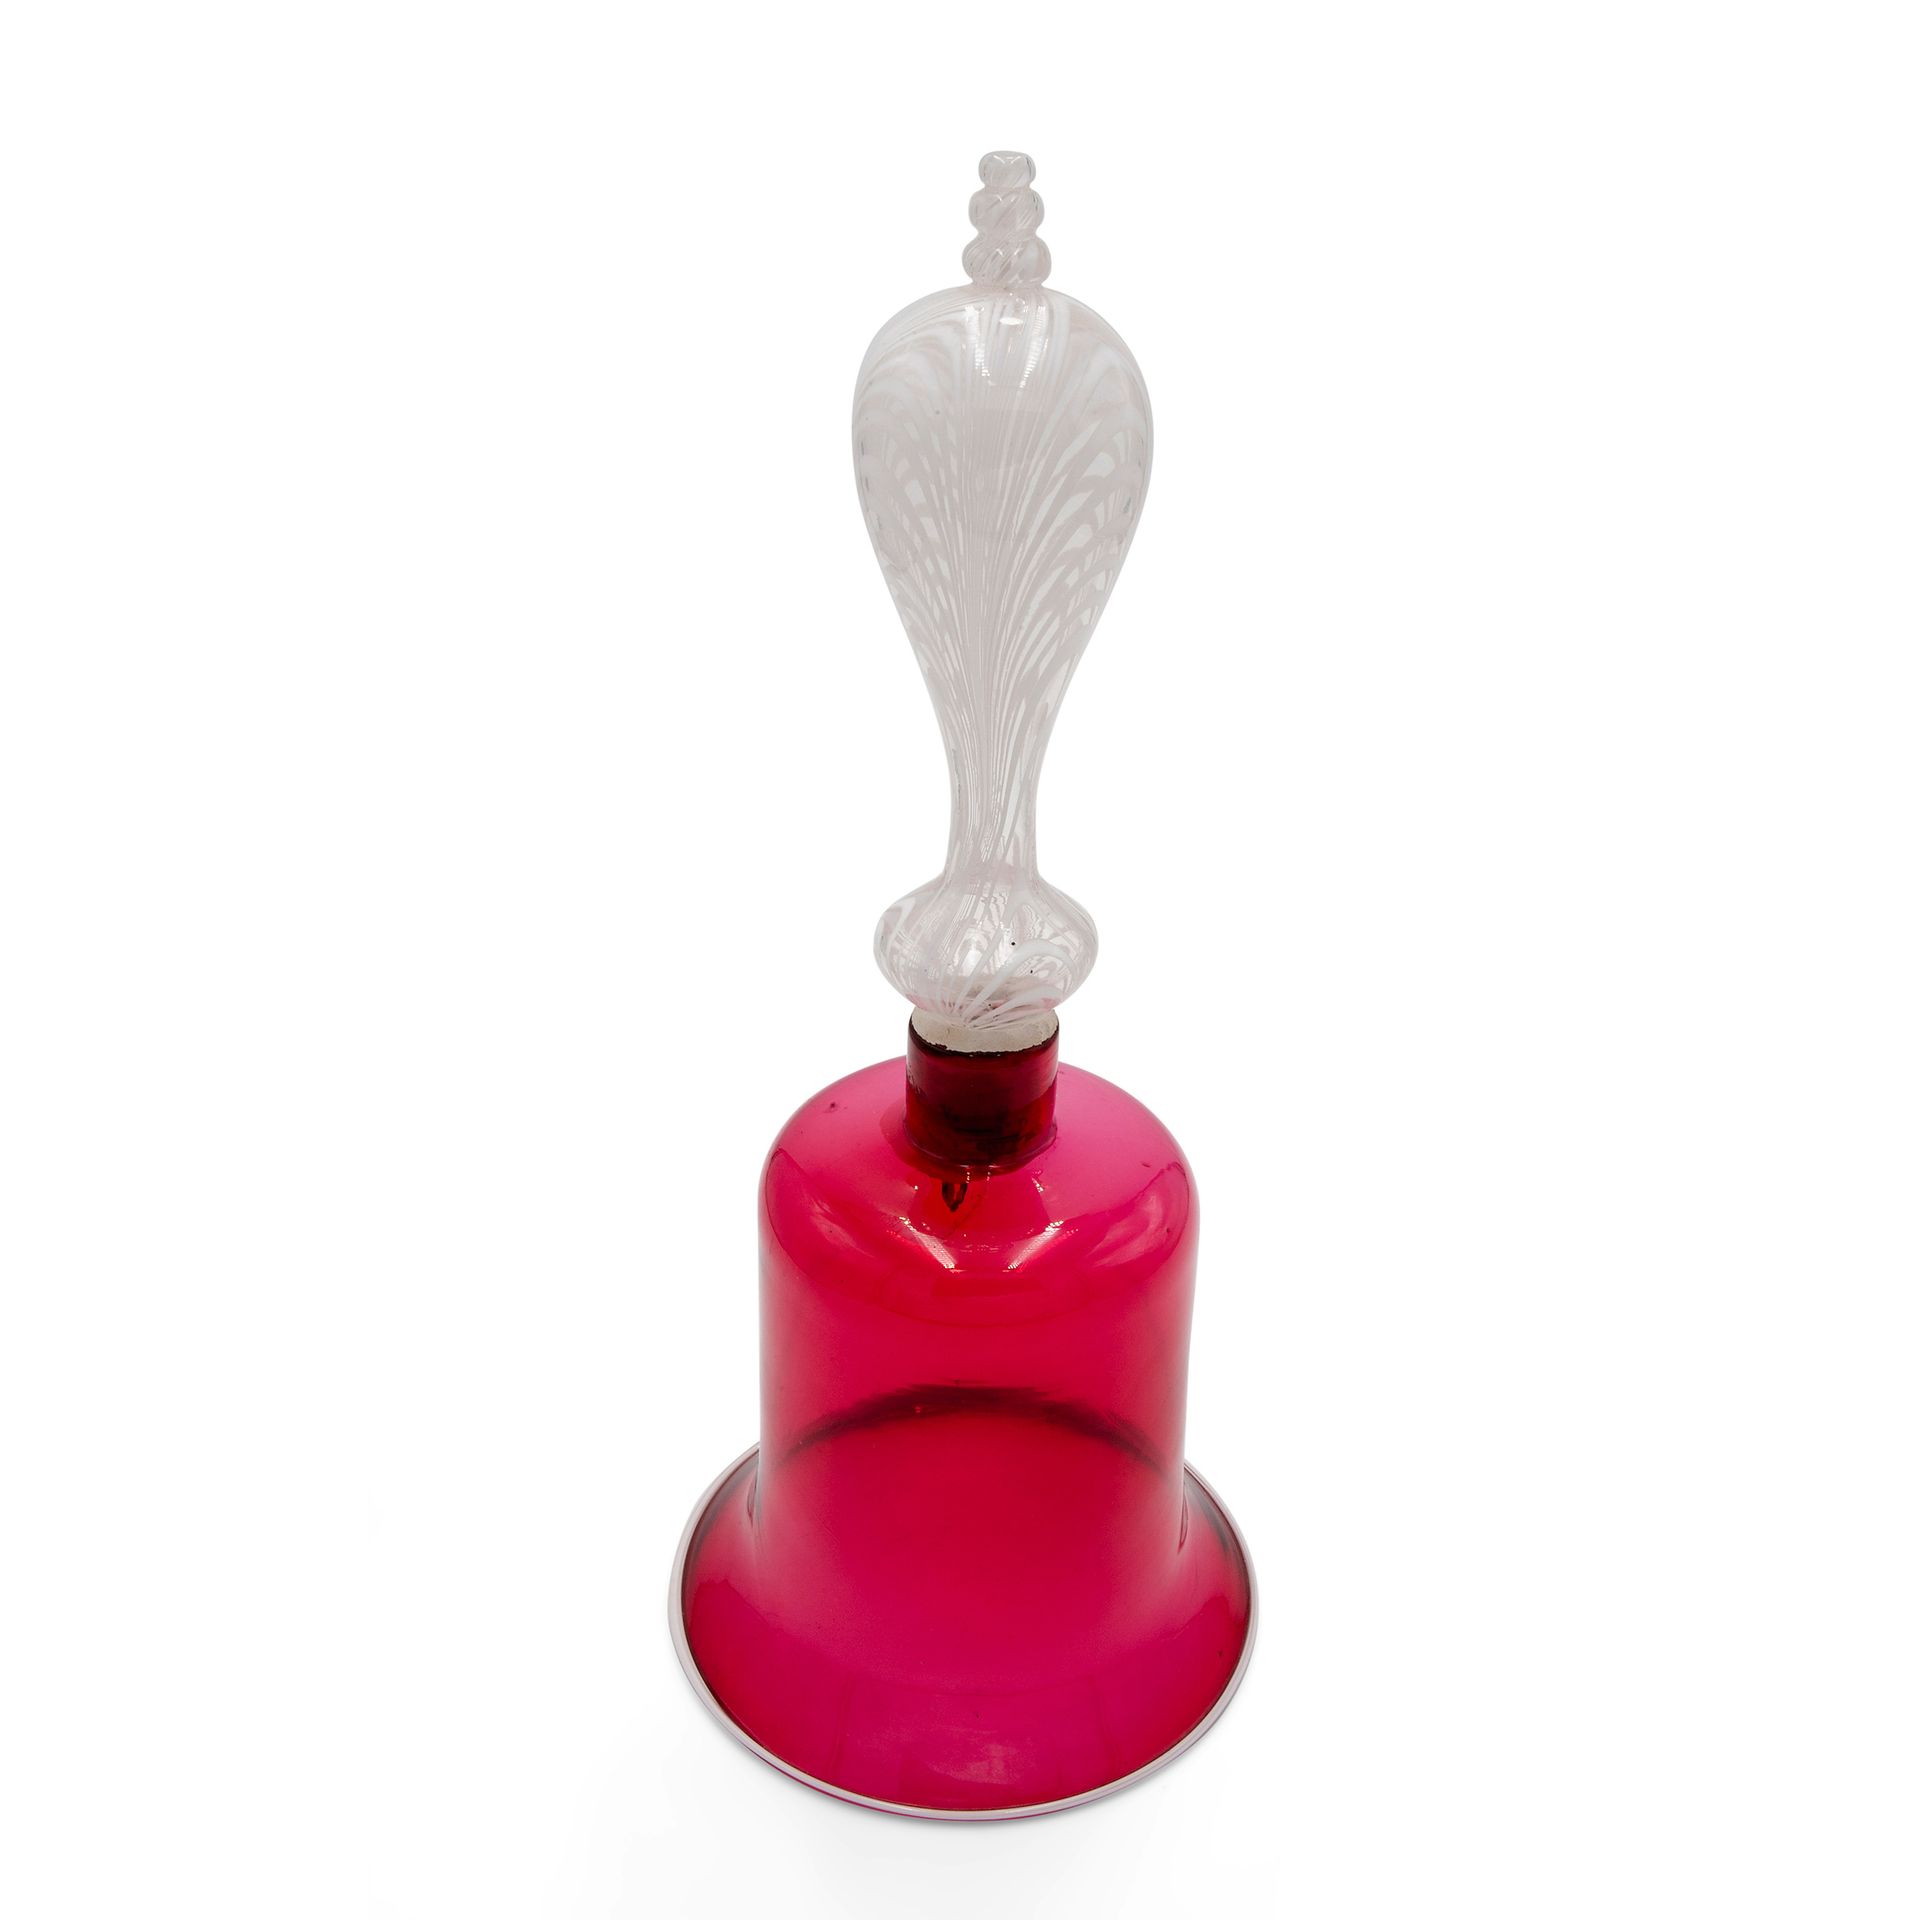 Victorian Nailsea red glass bell, circa 1880 布里斯托尔-奈尔西制造，不含拍子 尺寸14.1x6.1英寸。